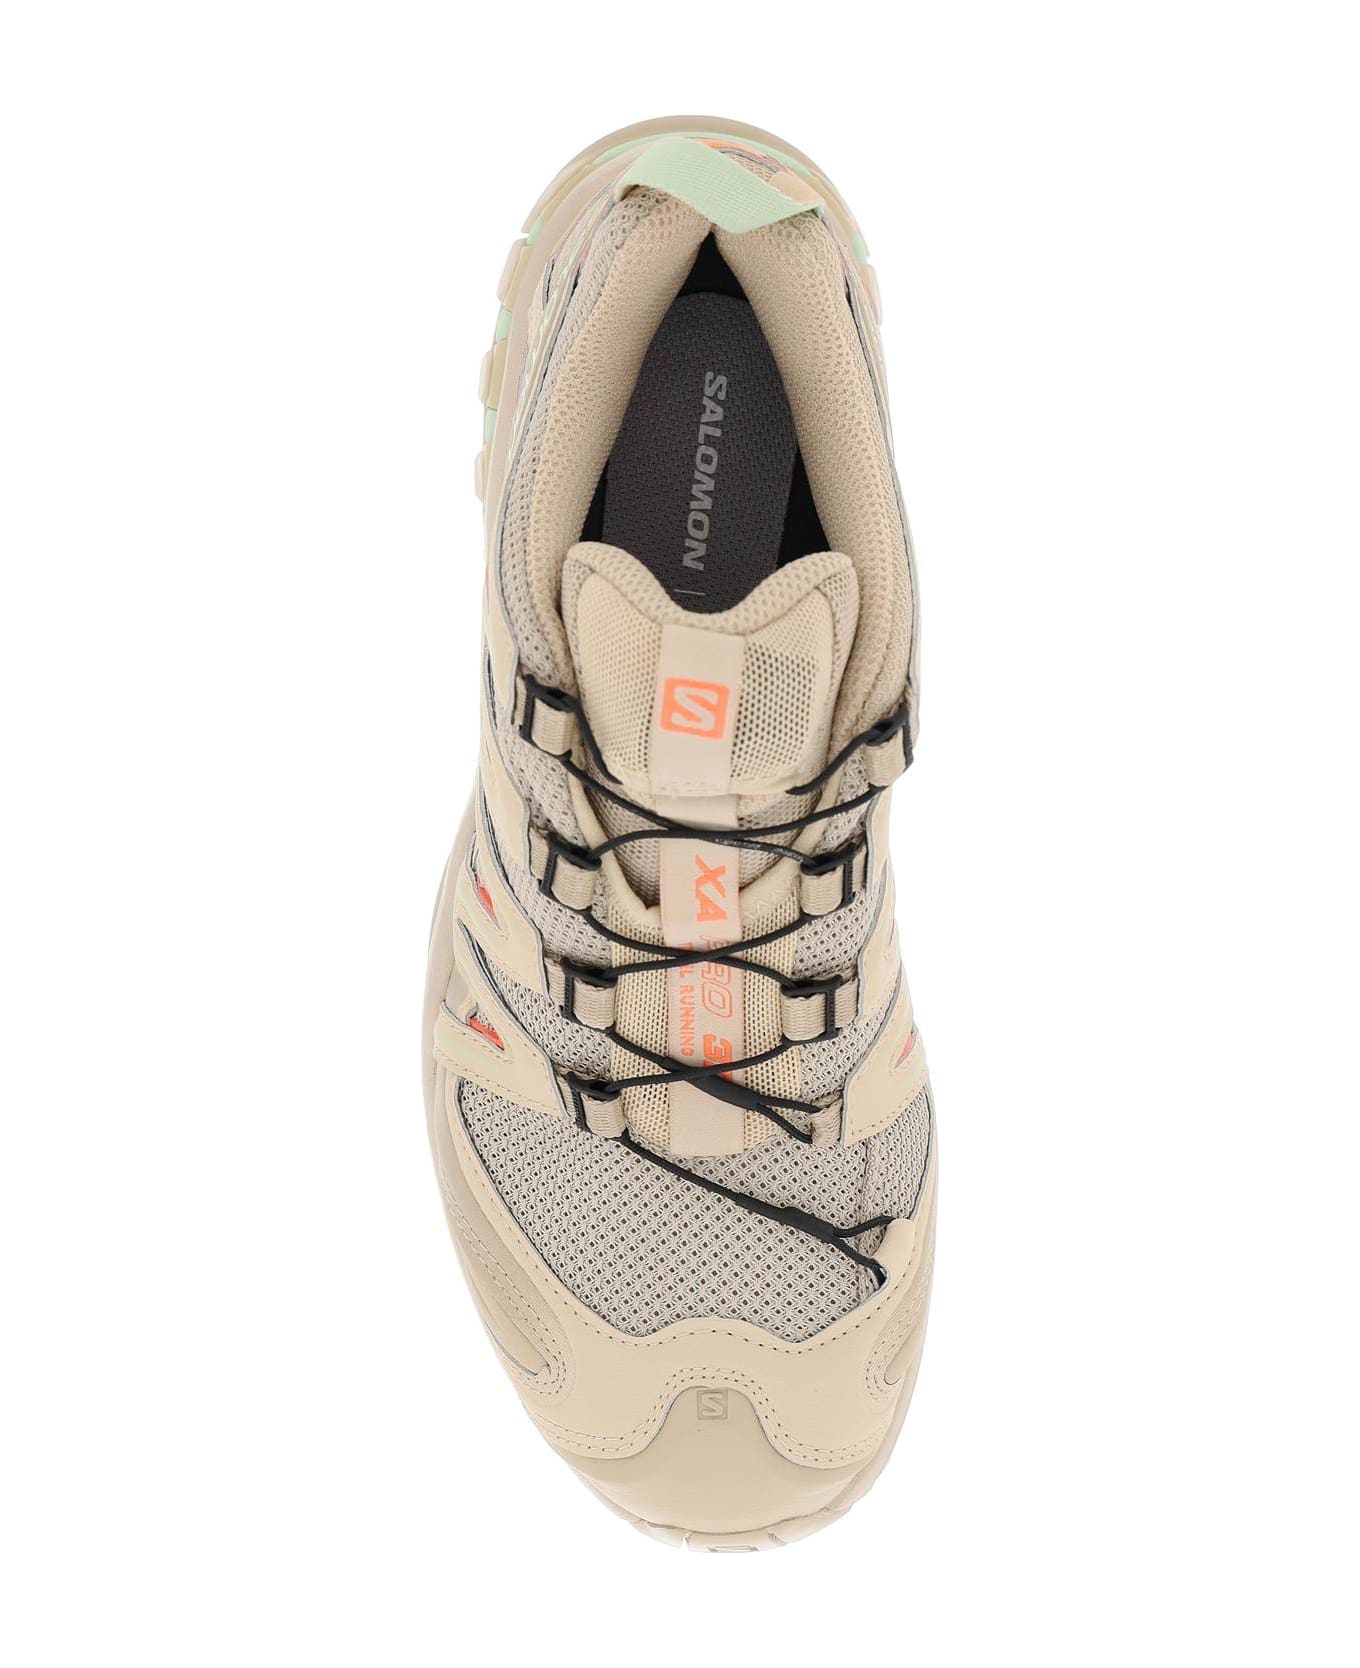 Salomon Xa Pro 3d Sneakers - WHITE PEPPER FRESH SALMON CELADON GREEN (Beige)